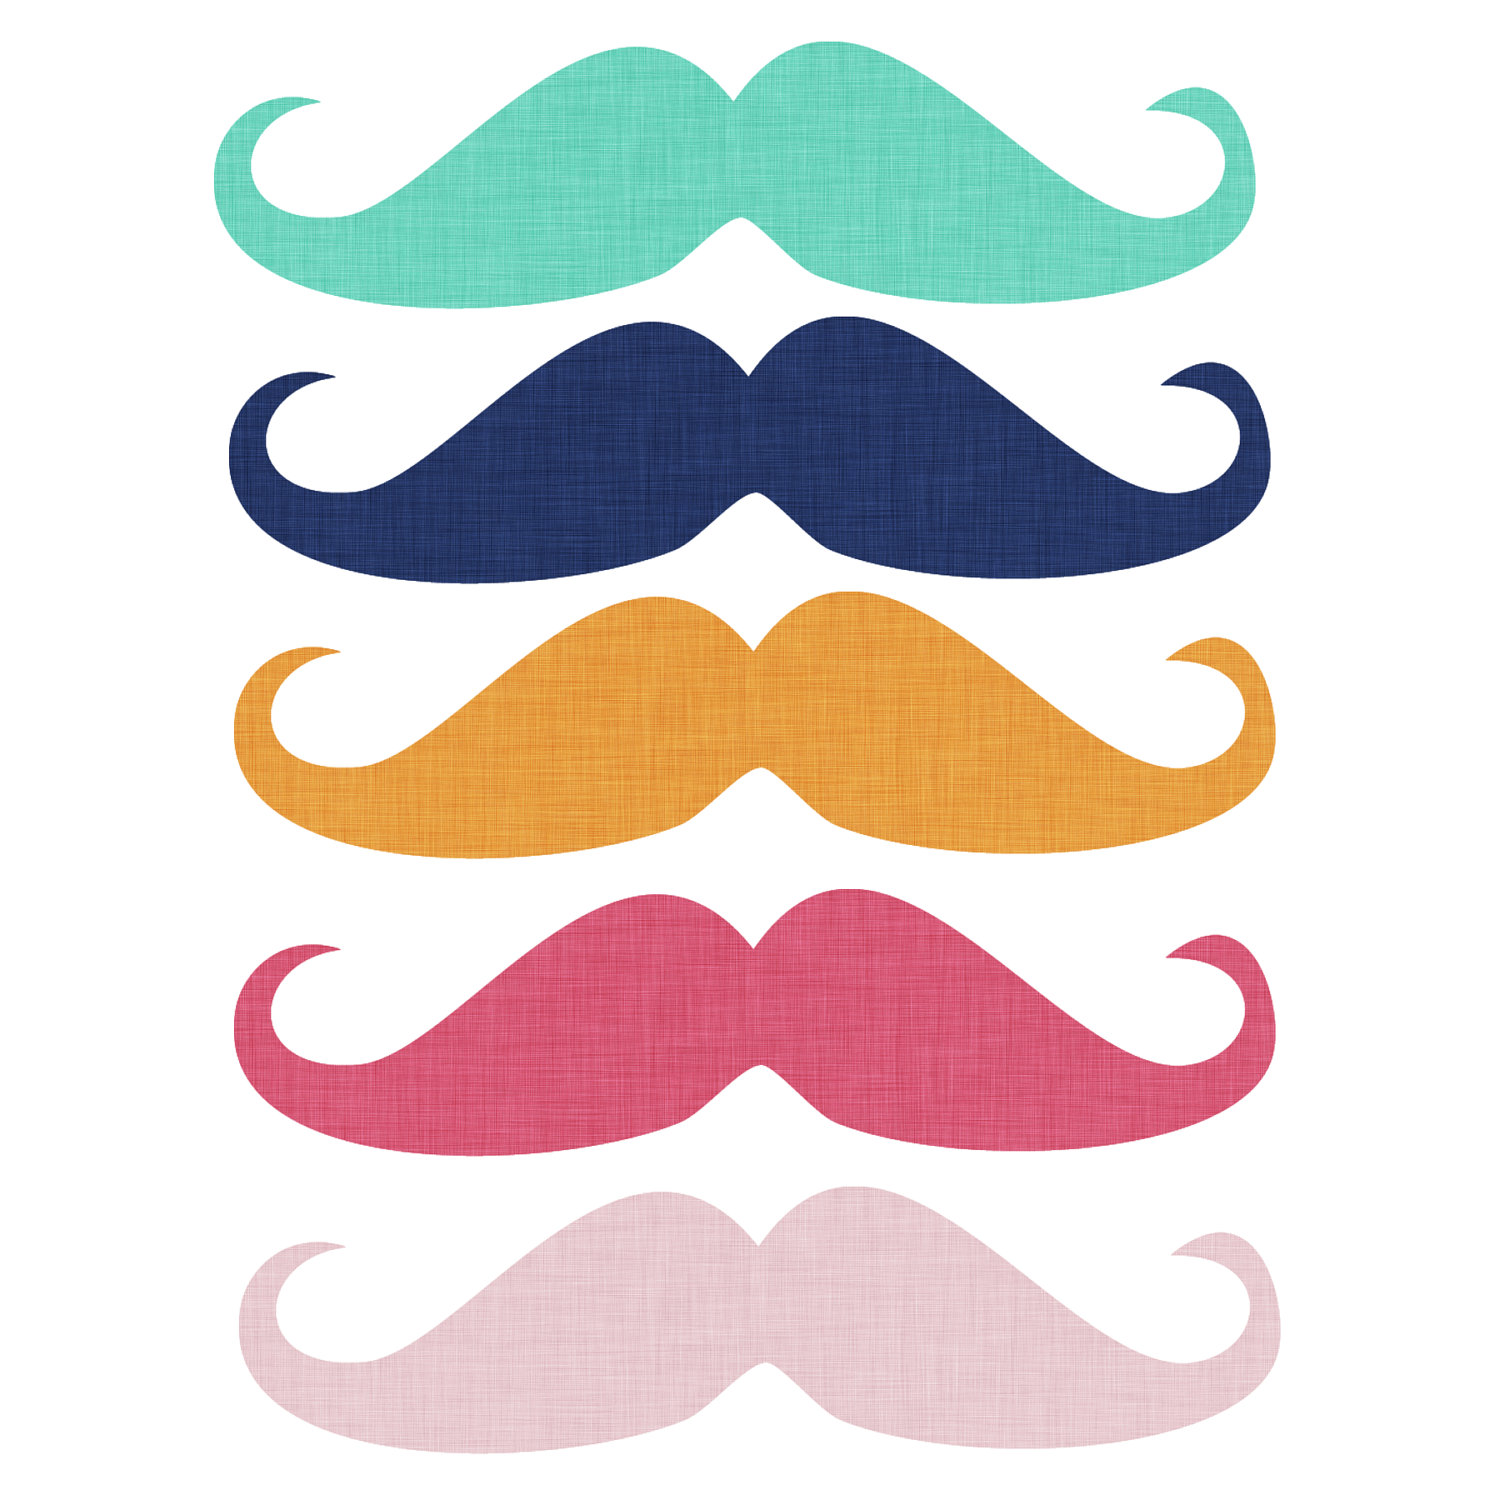 Popular items for moustache clipart 